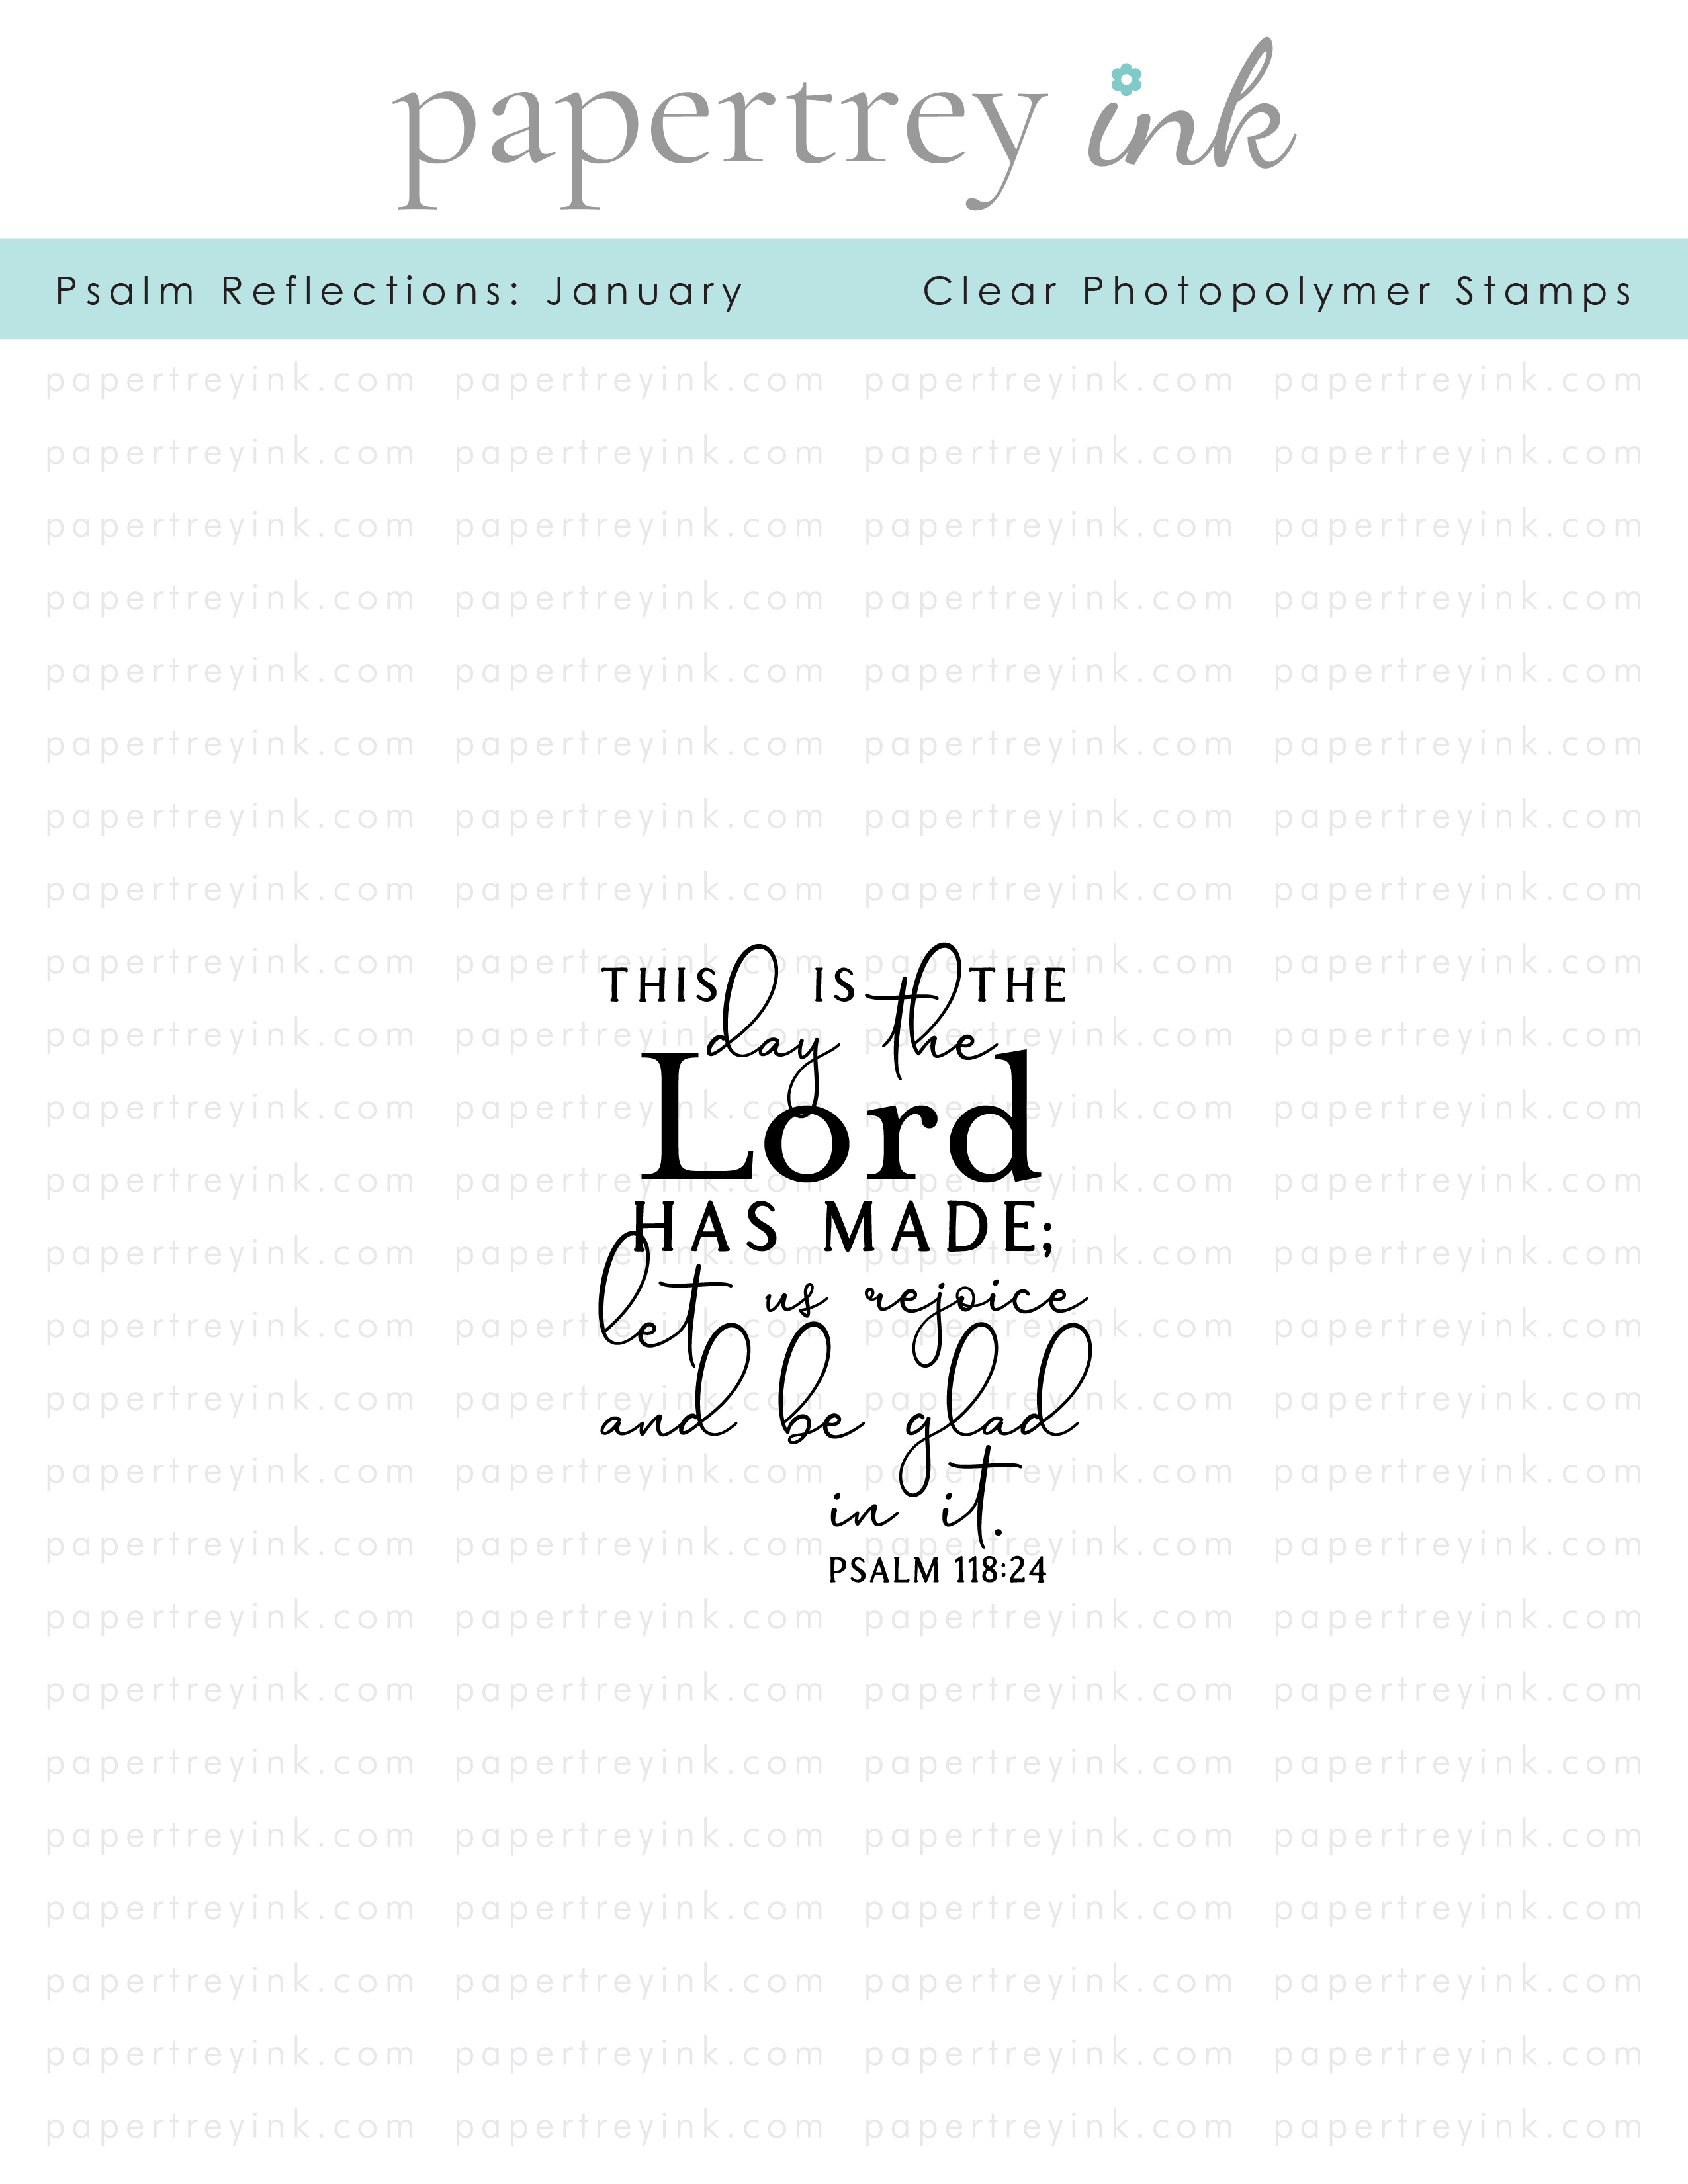 Psalm Reflections: January Mini Stamp Set